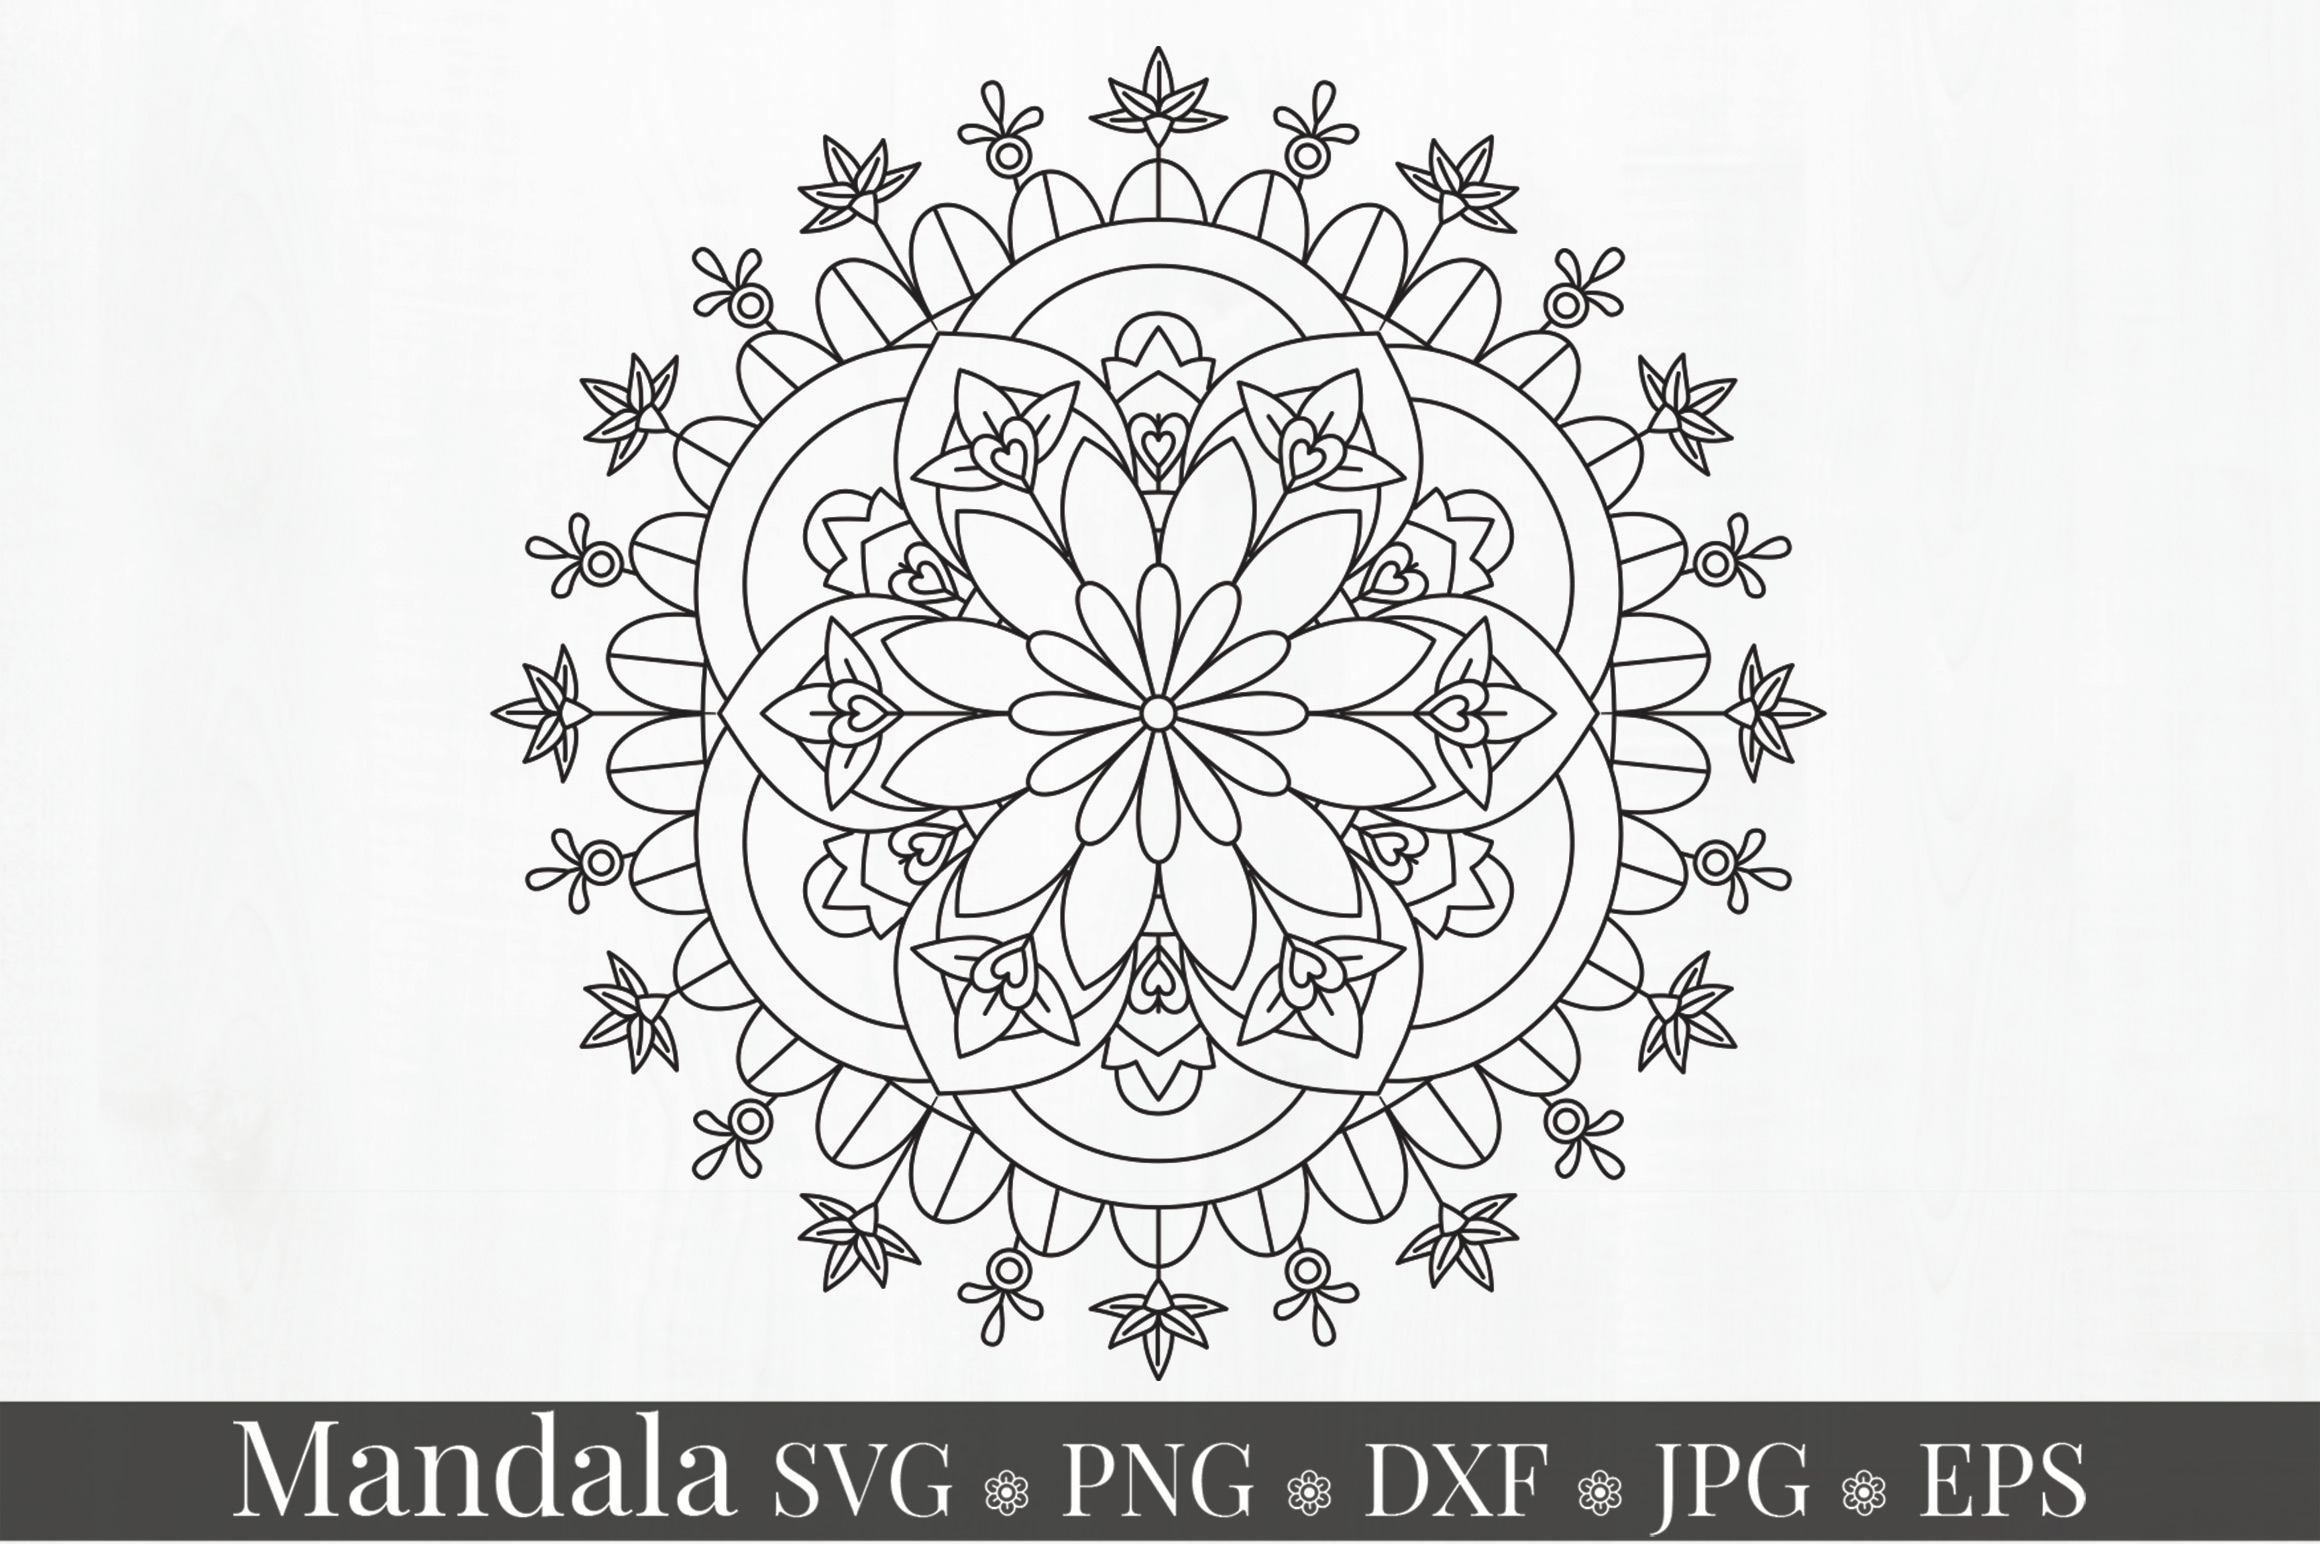 Download Mandala Art Graphic By Alyviaskye Creative Fabrica